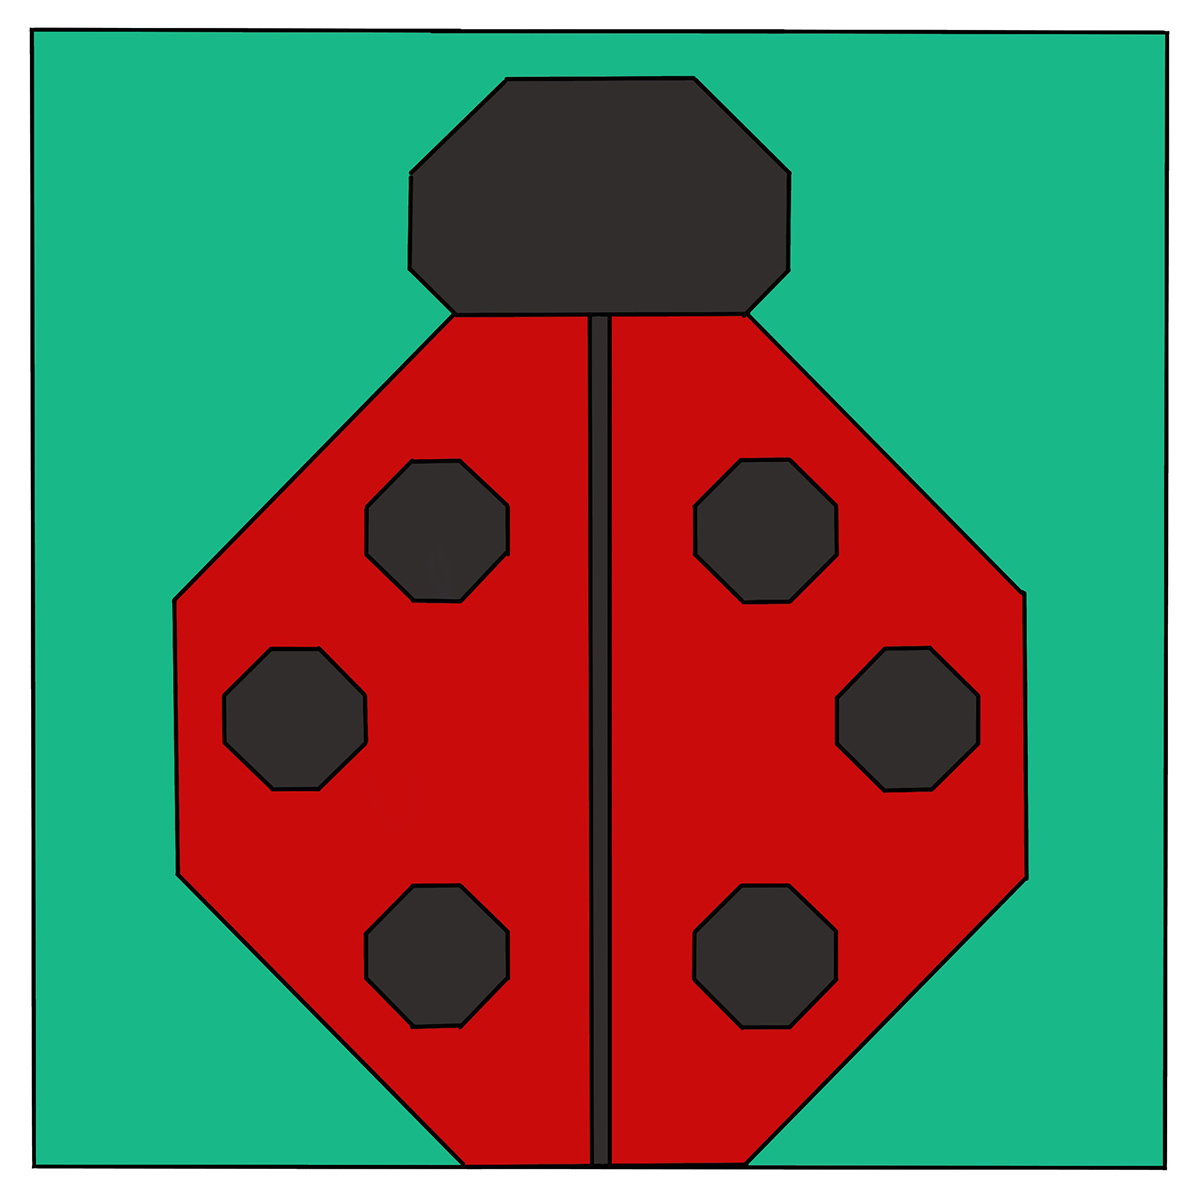 Ladybug quilt block pattern